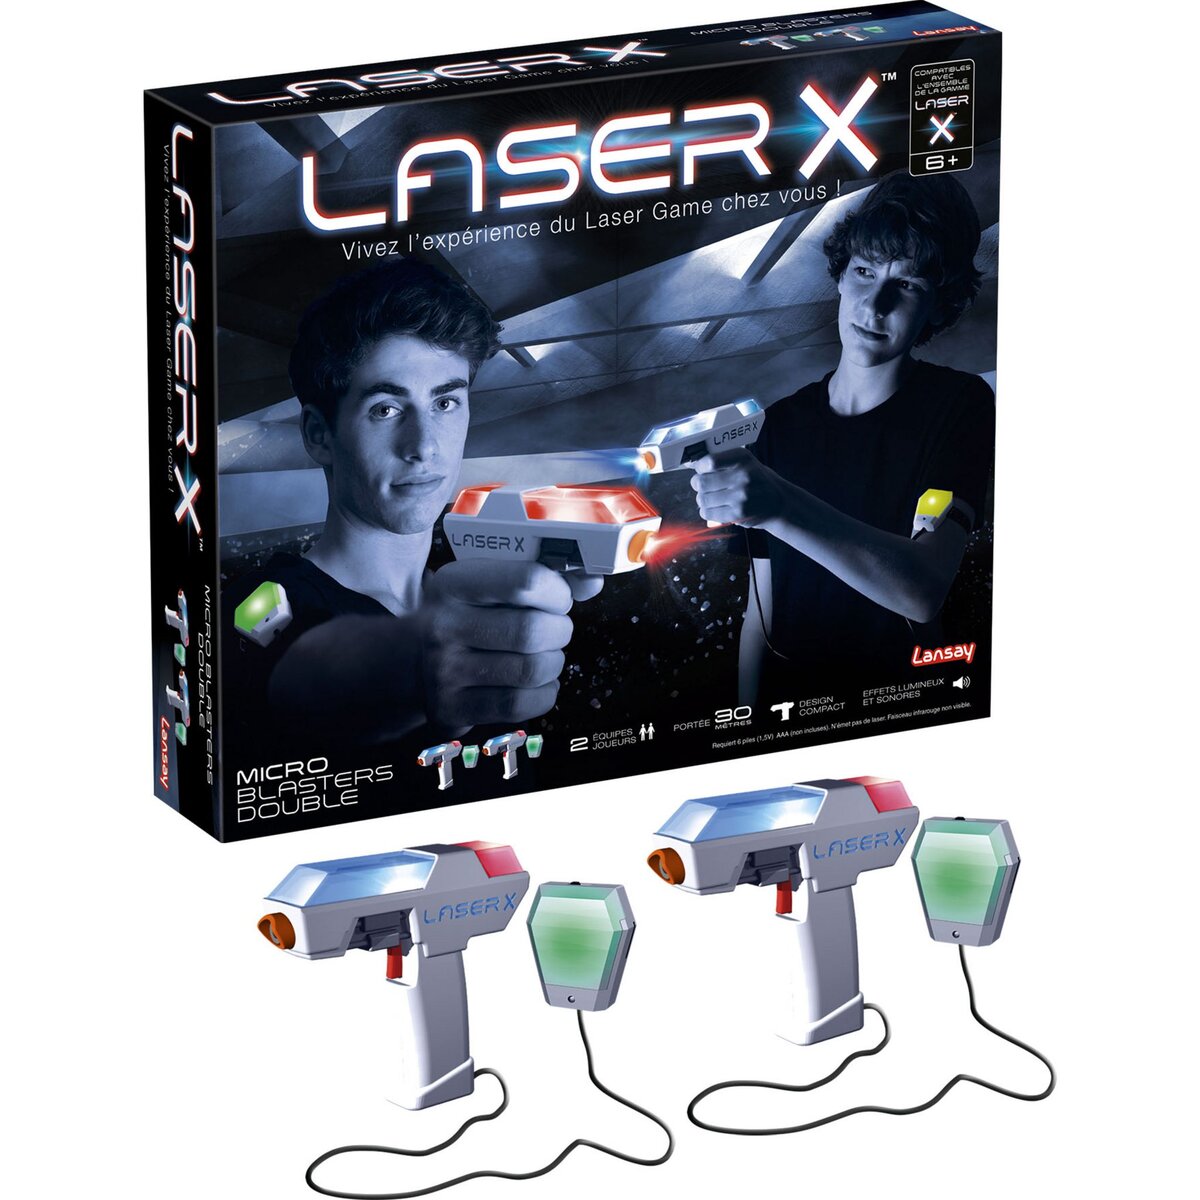 LANSAY Laser X Micro Double